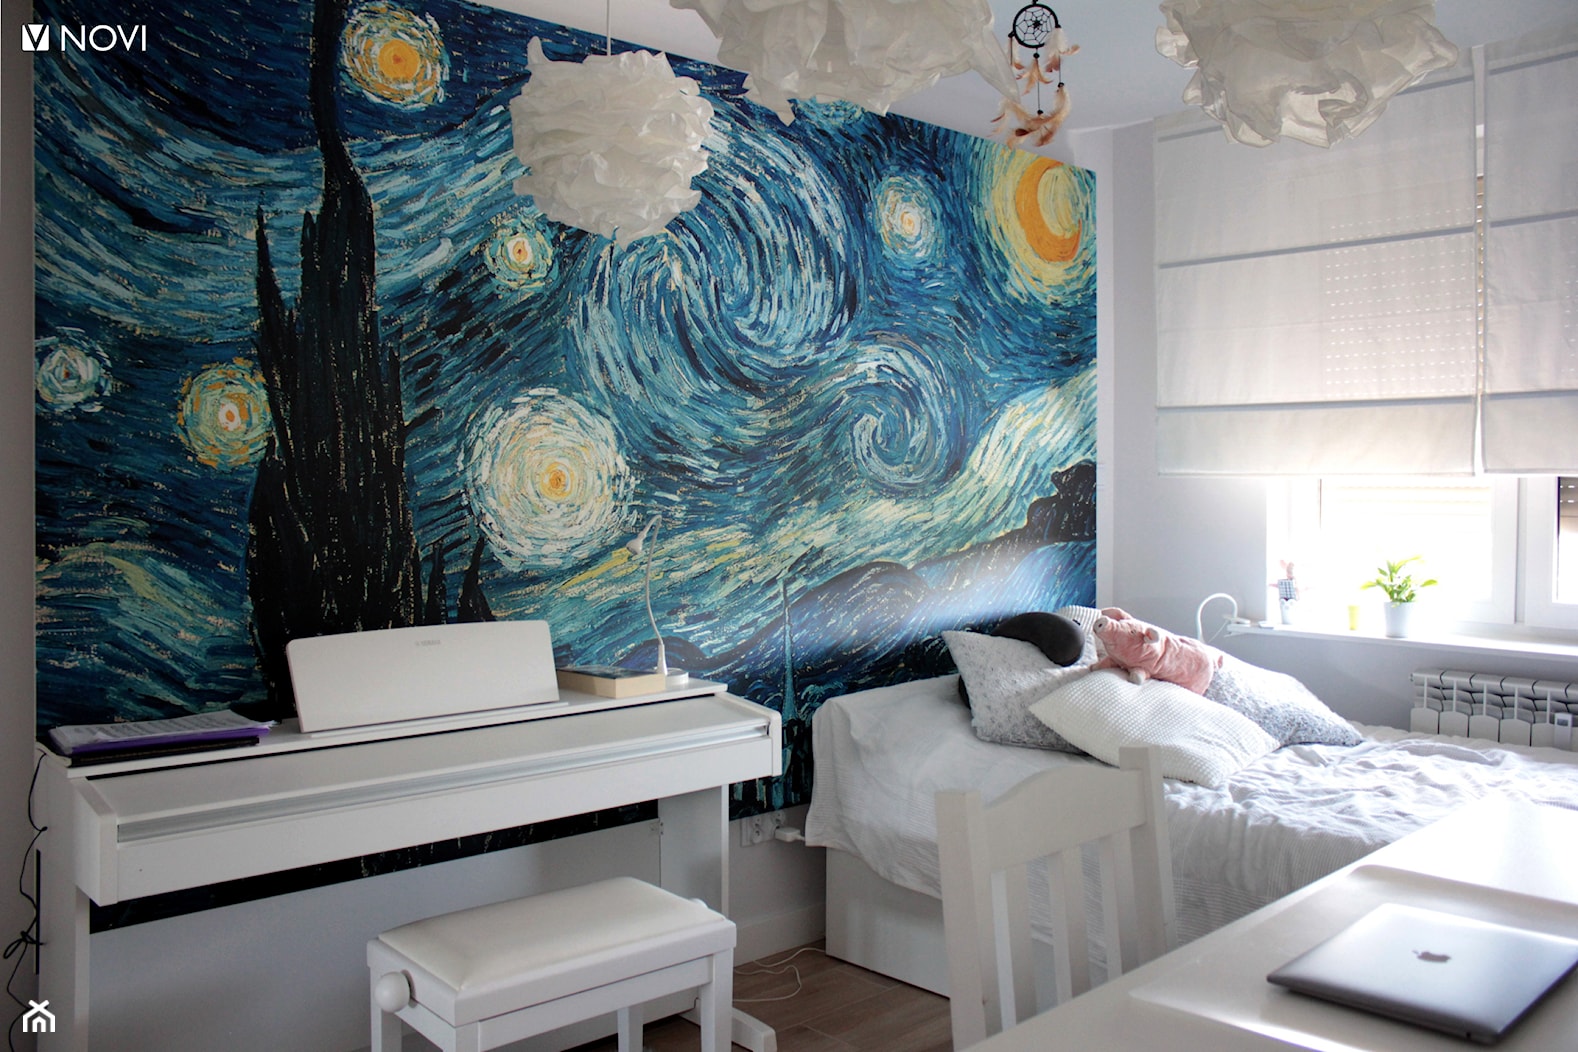 Pokój nastolatki z fototapetą Gwieździsta noc Vincenta van Gogh - zdjęcie od NOVI projektowanie - Homebook